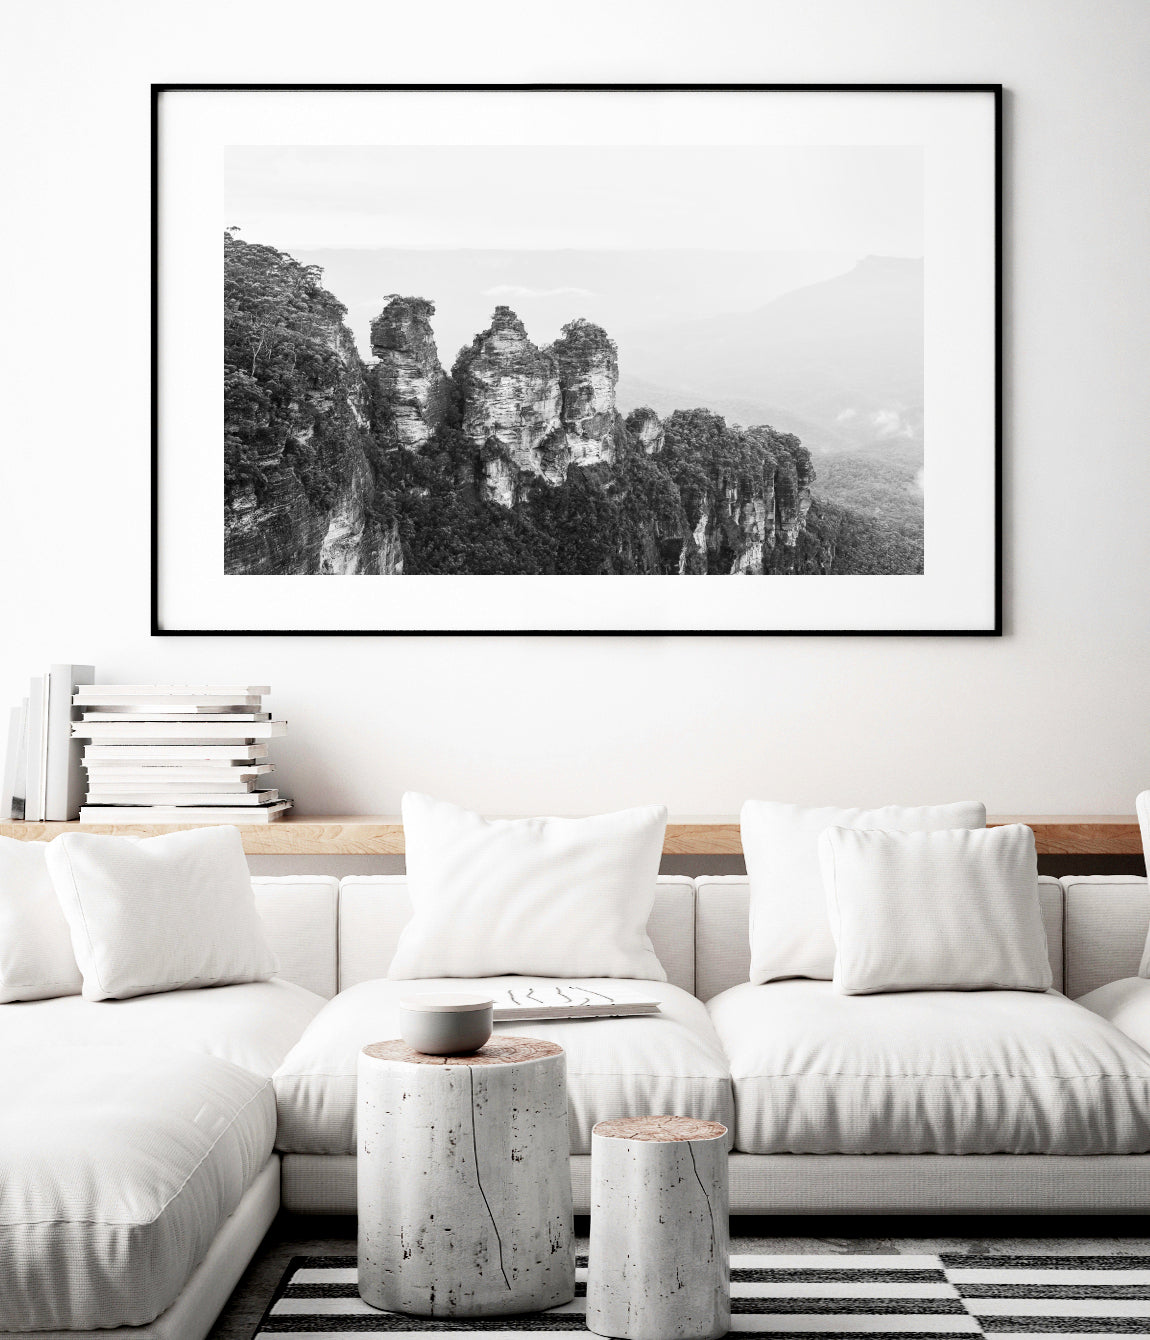 Black & White Nature Wall Art, Three Sisters Photography Print, Large Landscape Wall Decor | arrtopia